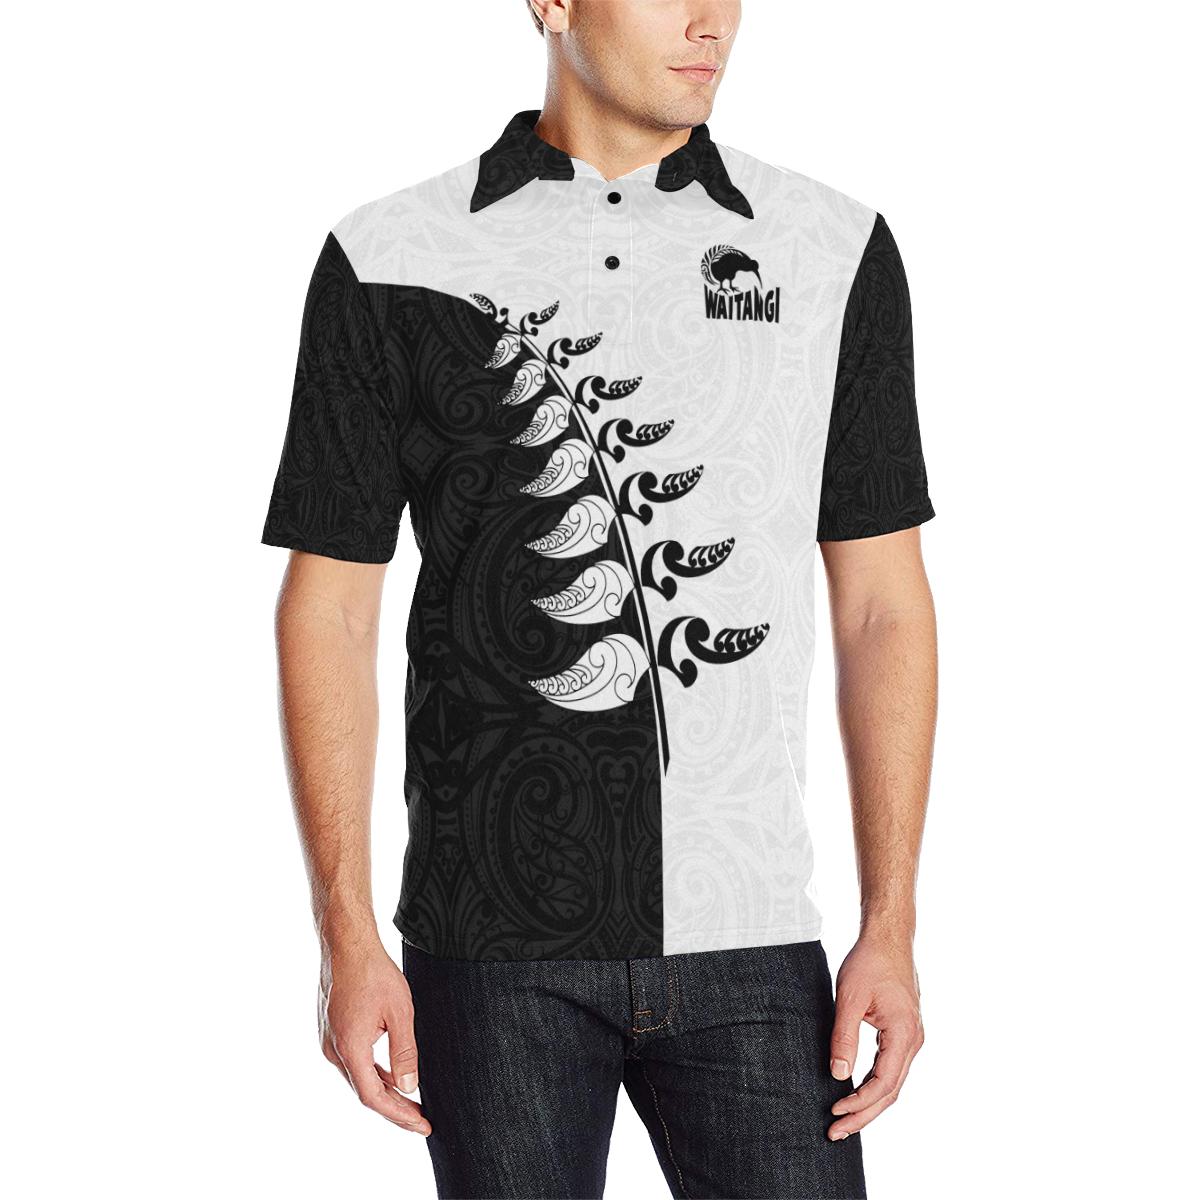 waitangi-black-and-white-polo-t-shirt